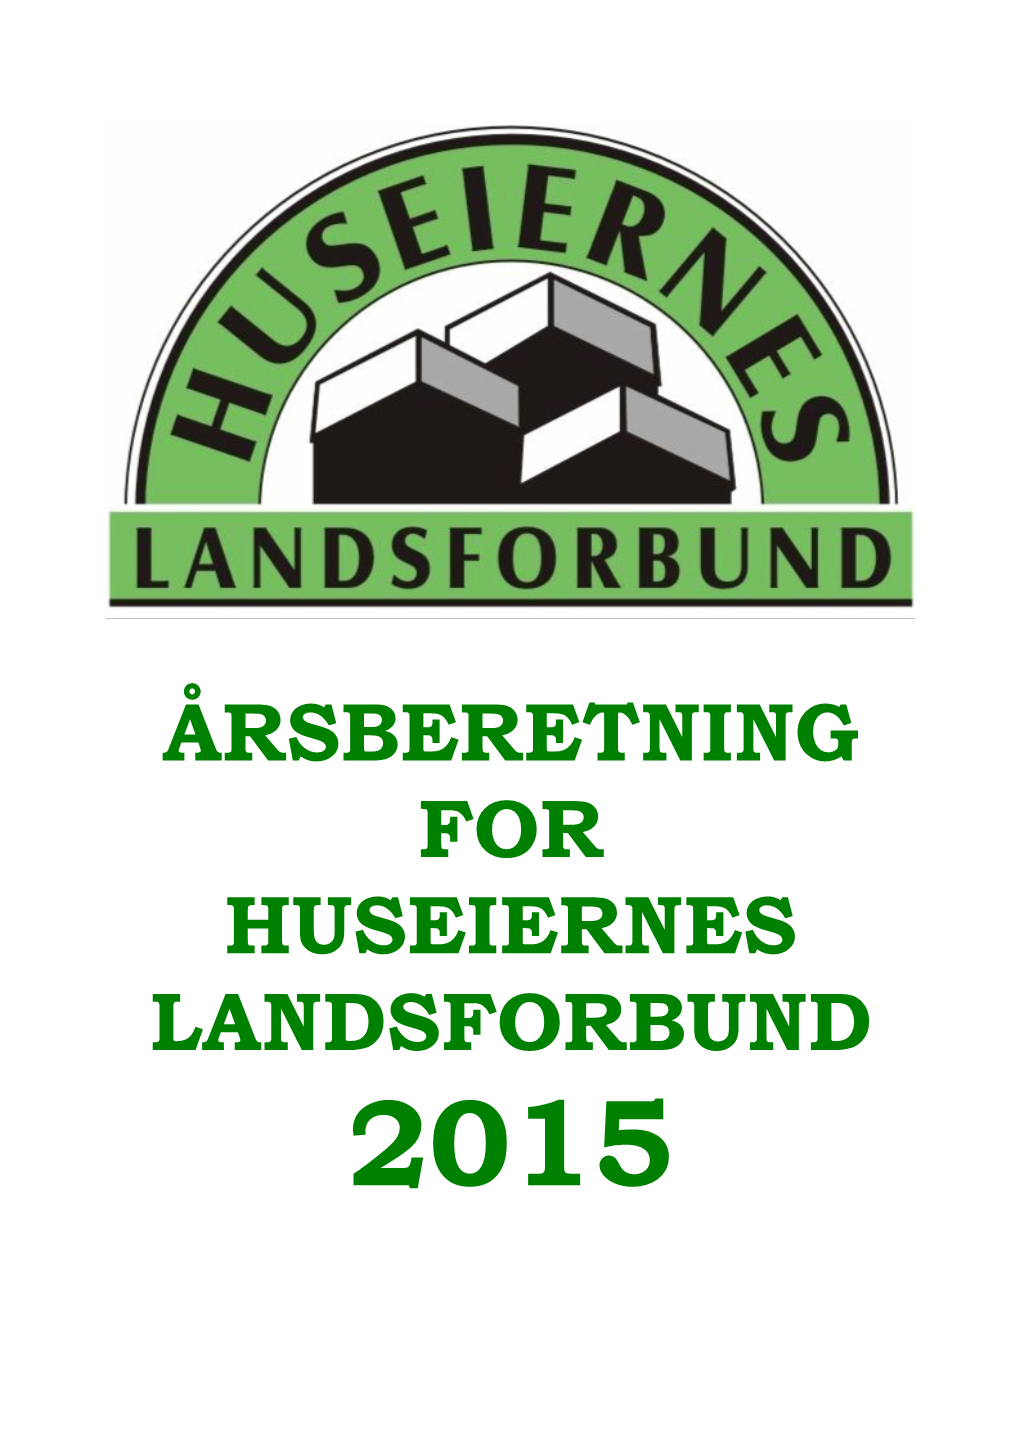 Årsberetning Huseiernes Landsforbund 2015